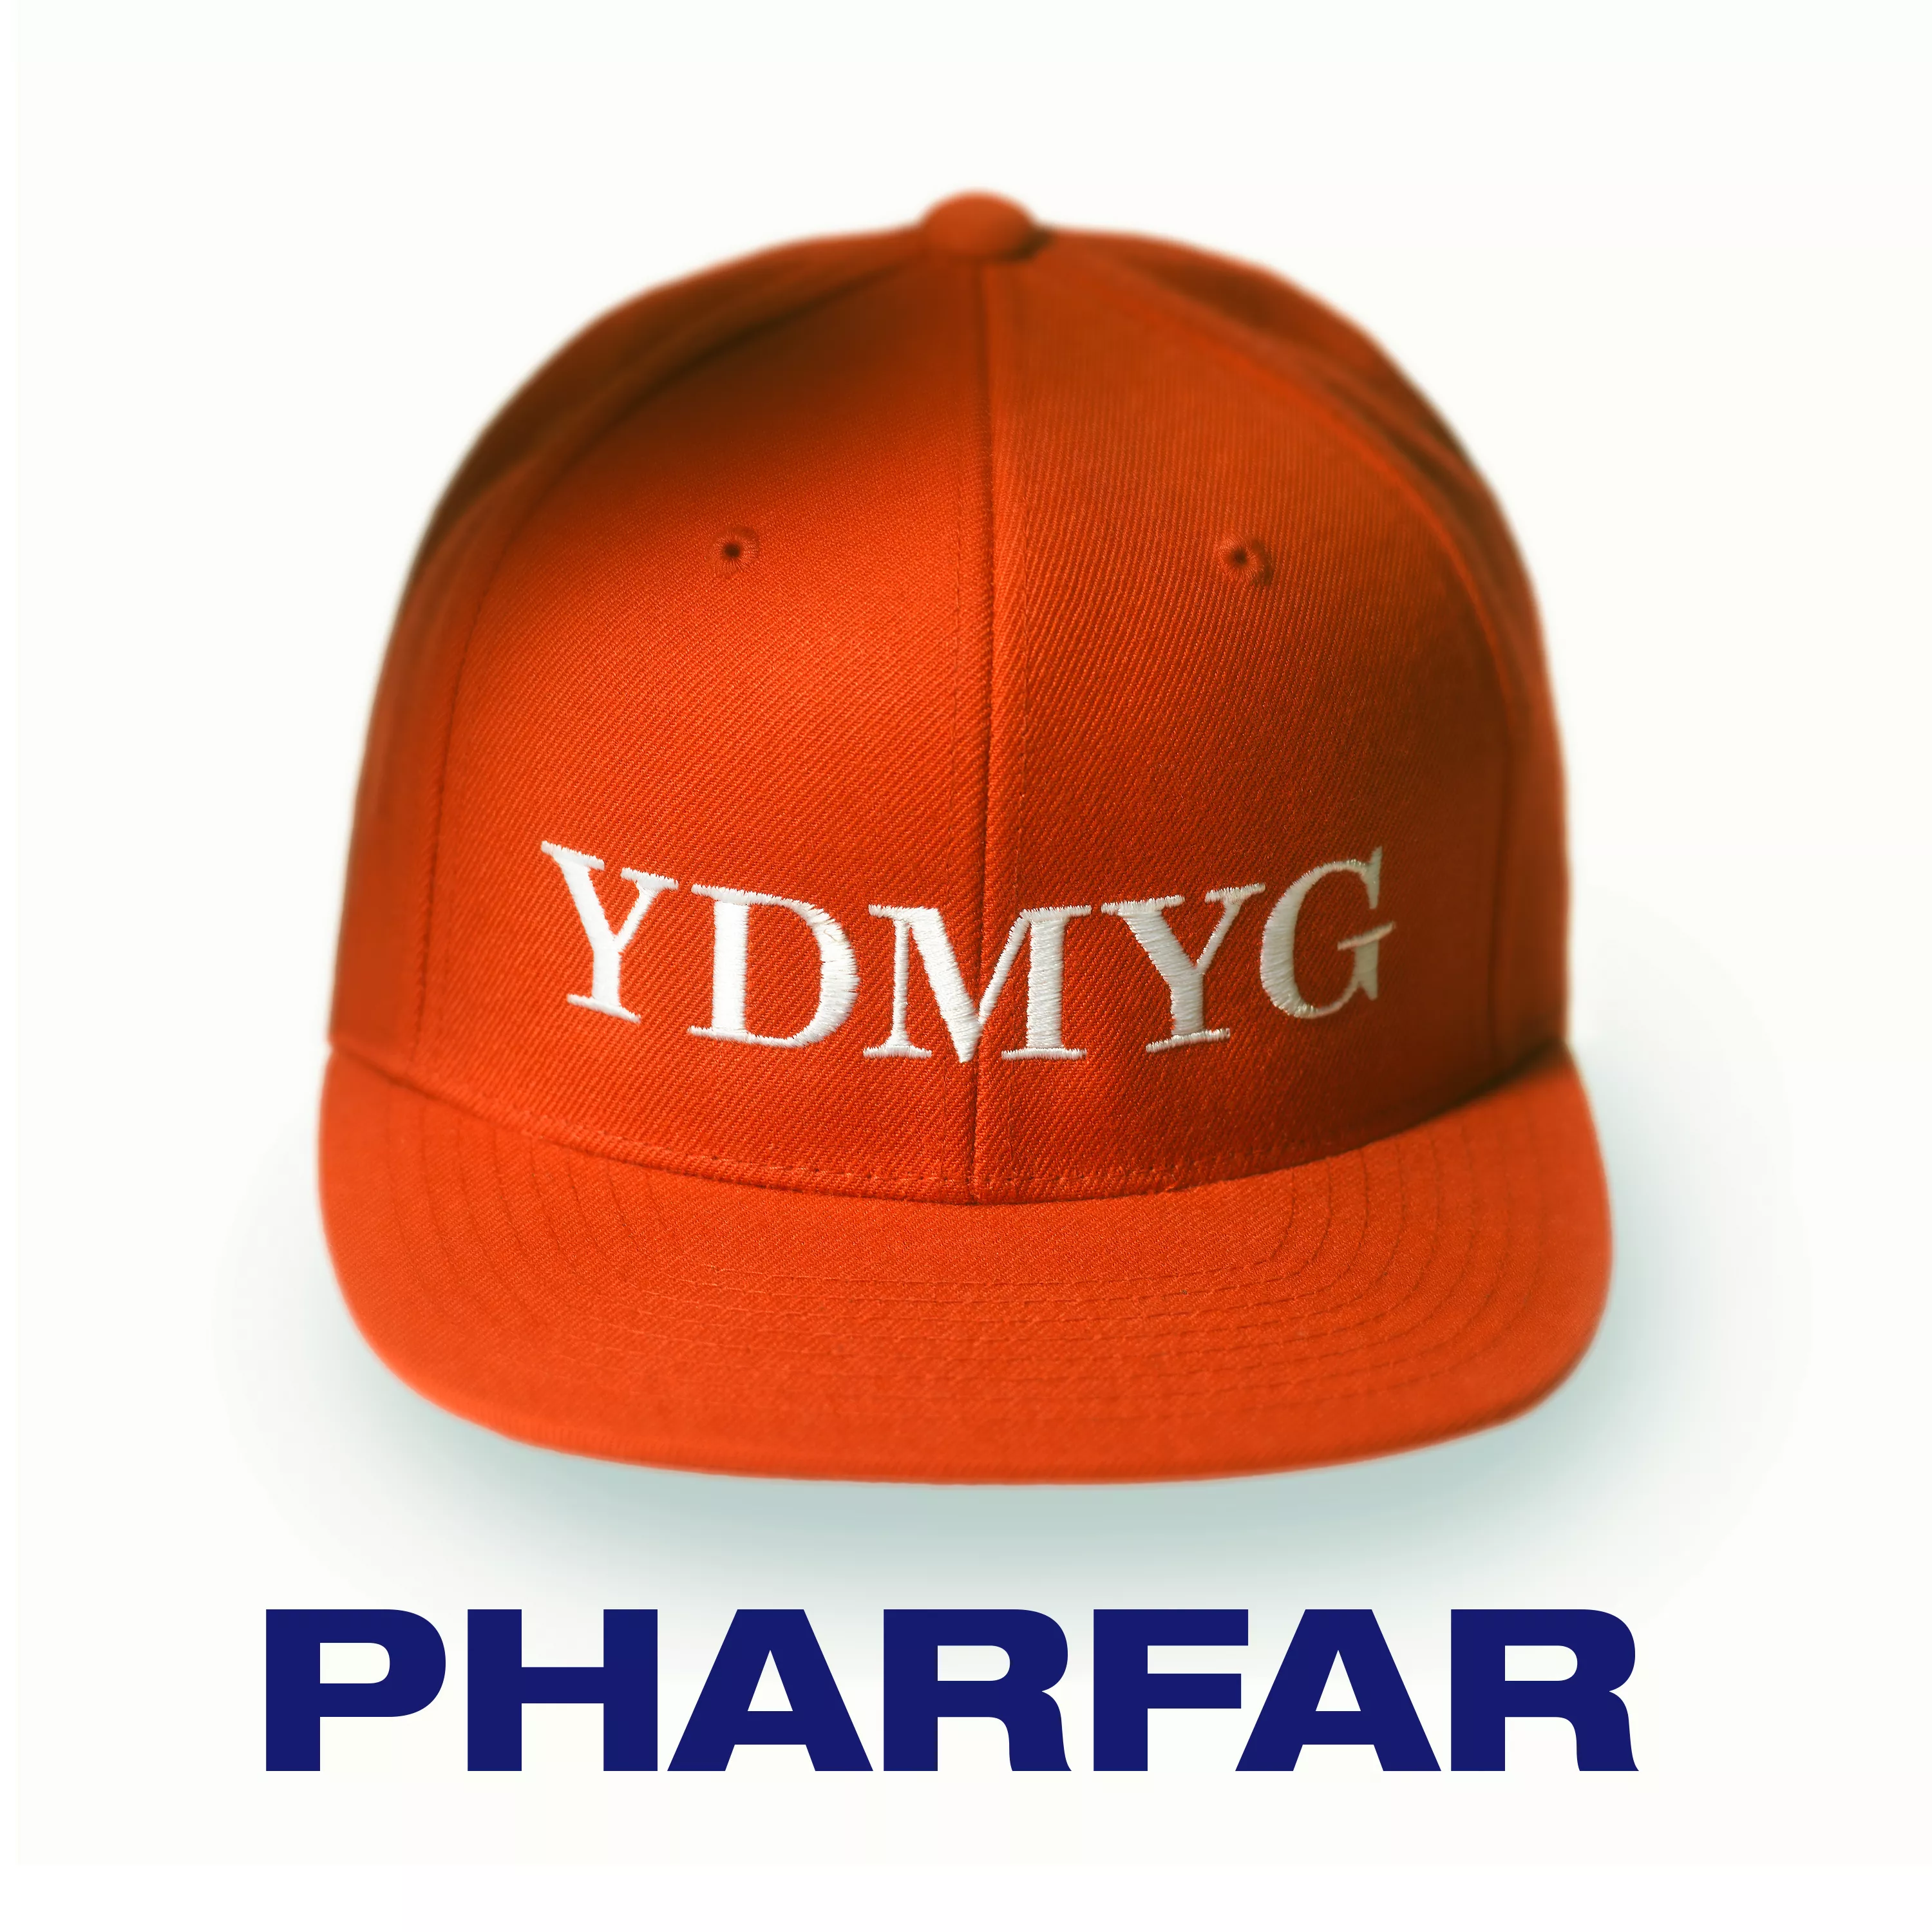 Ydmyg - Pharfar